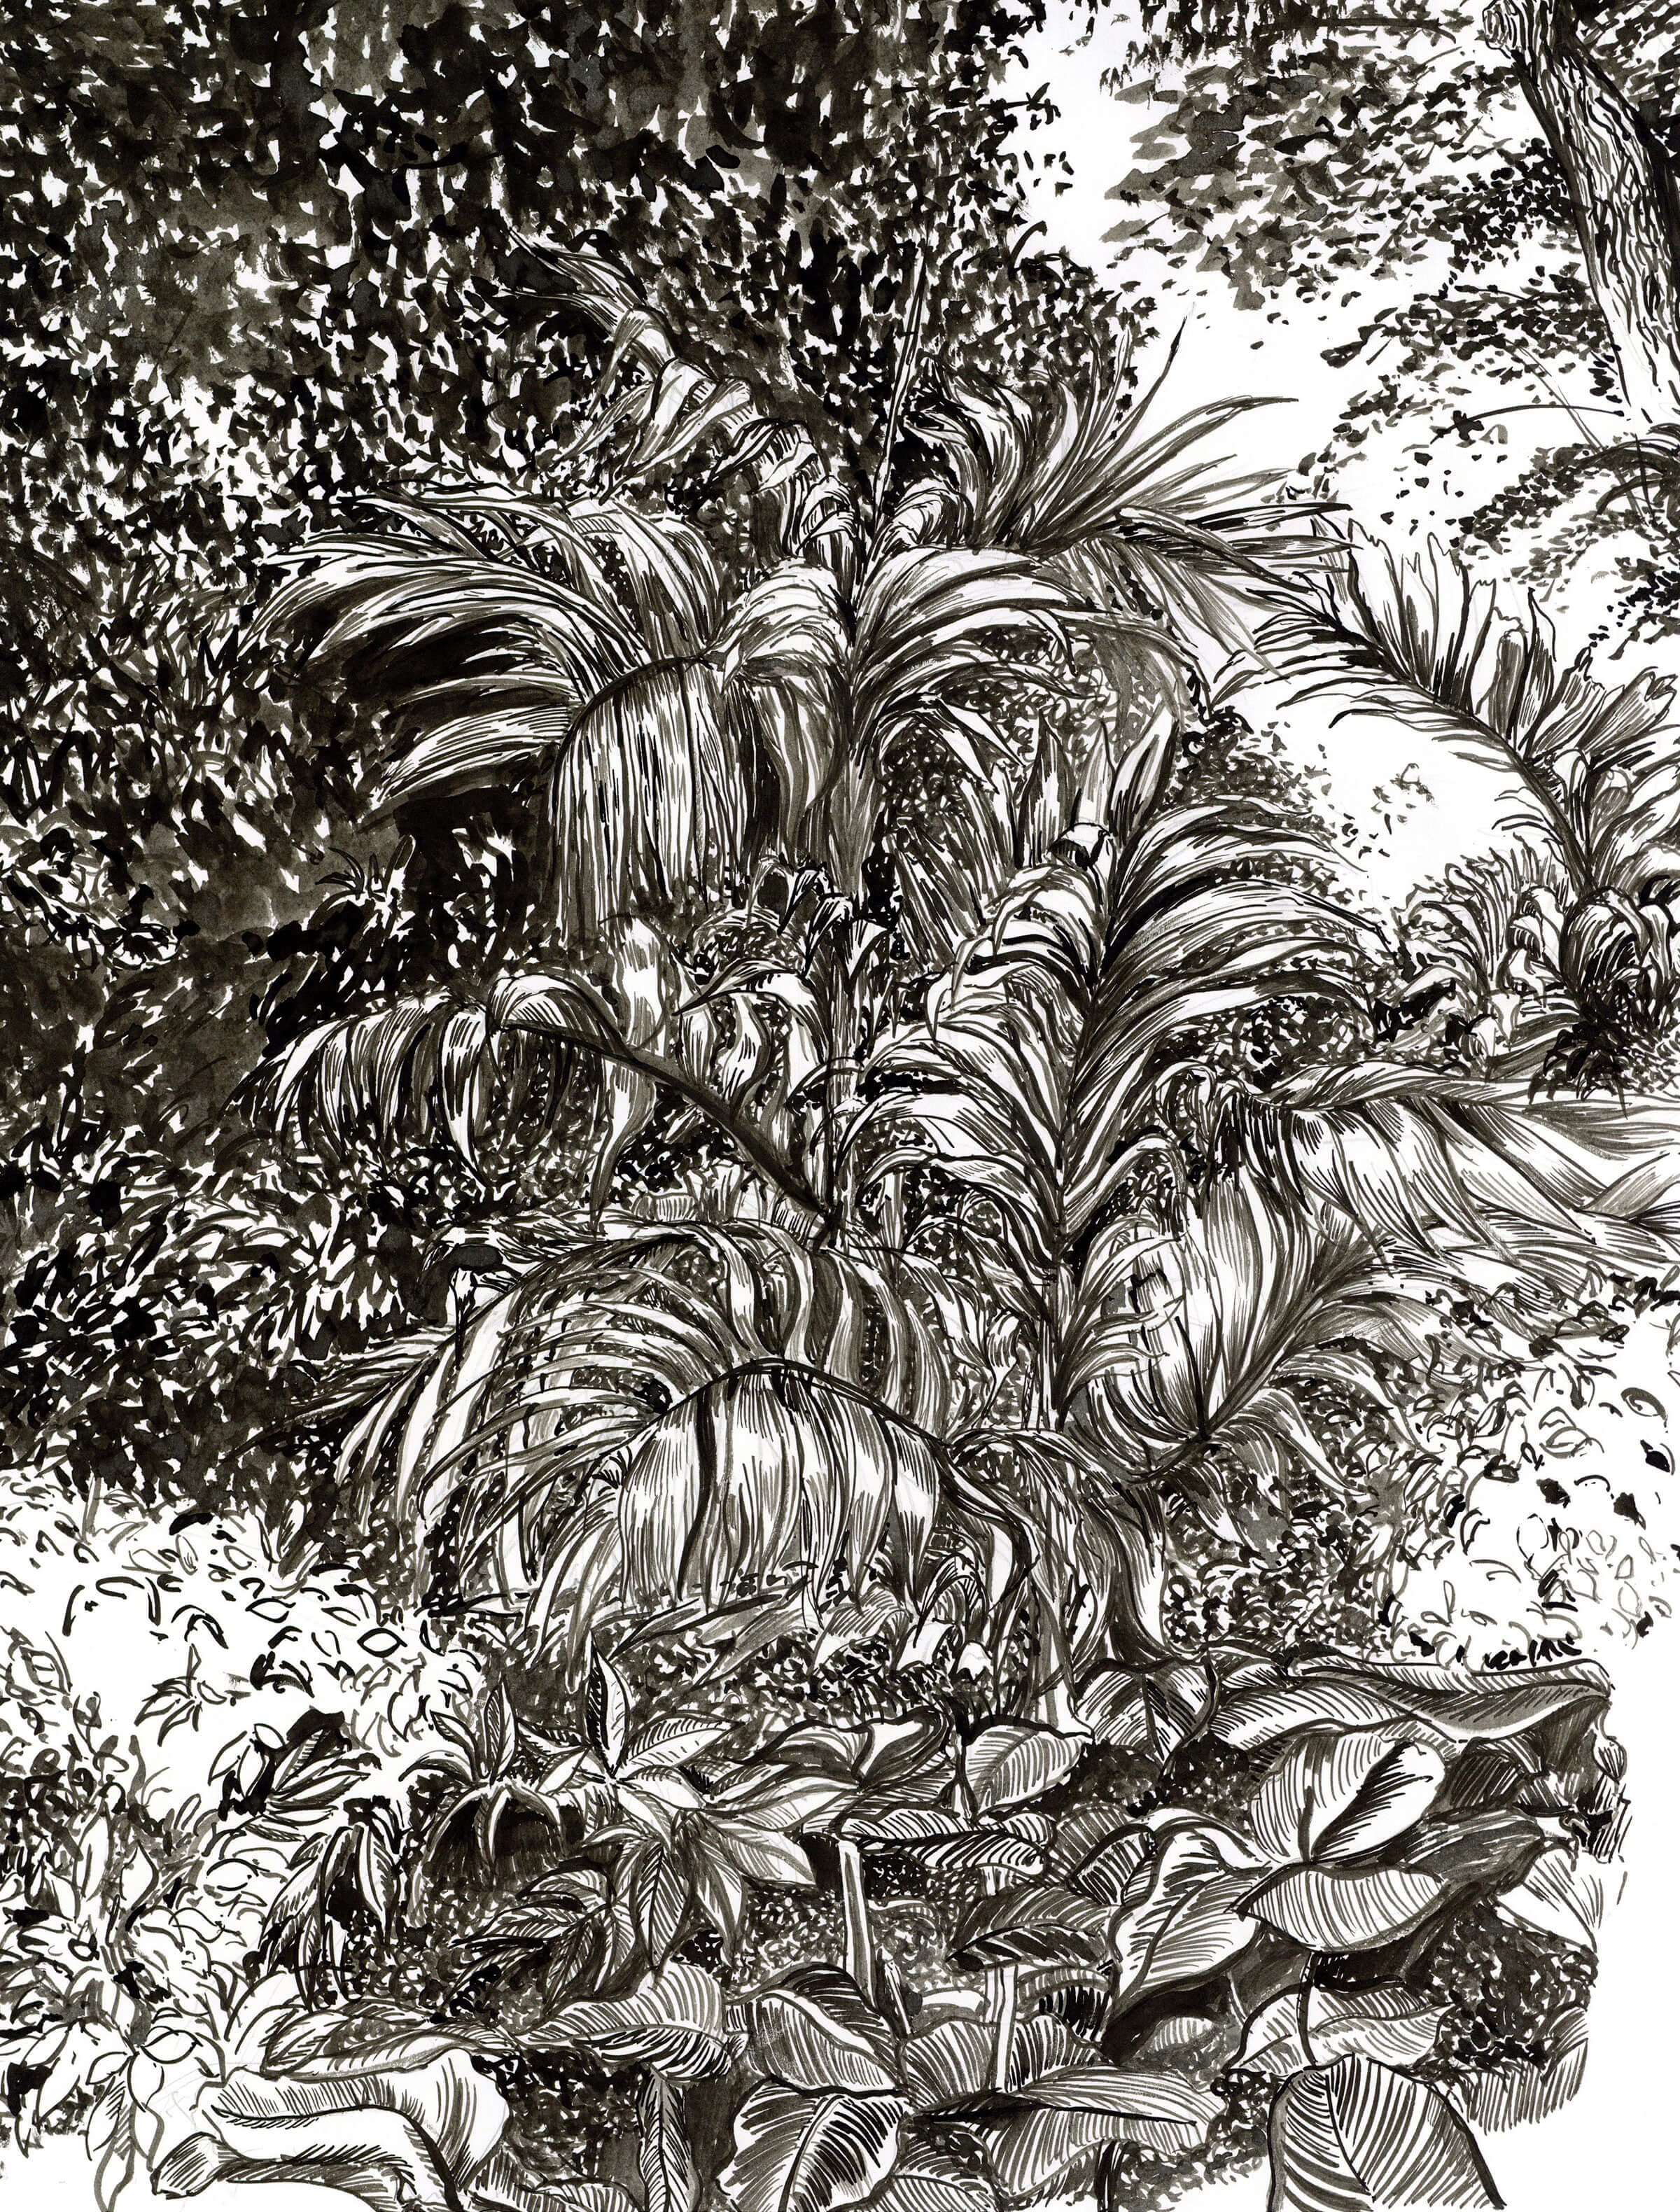 Black-and-white sketch of a fern in a jungle.